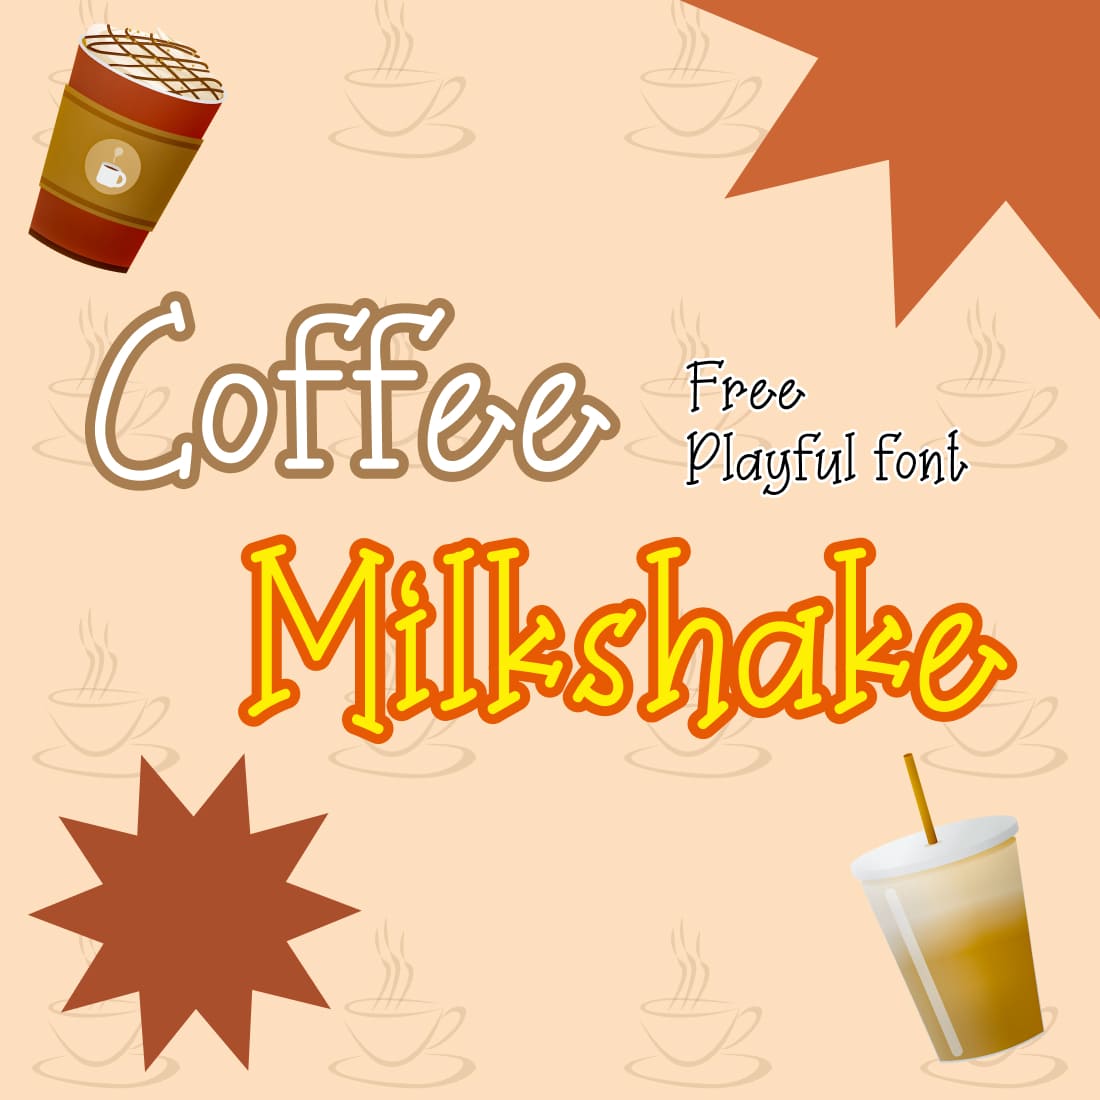 Playful Coffee Milkshake font free Main Cover image by MasterBundles.